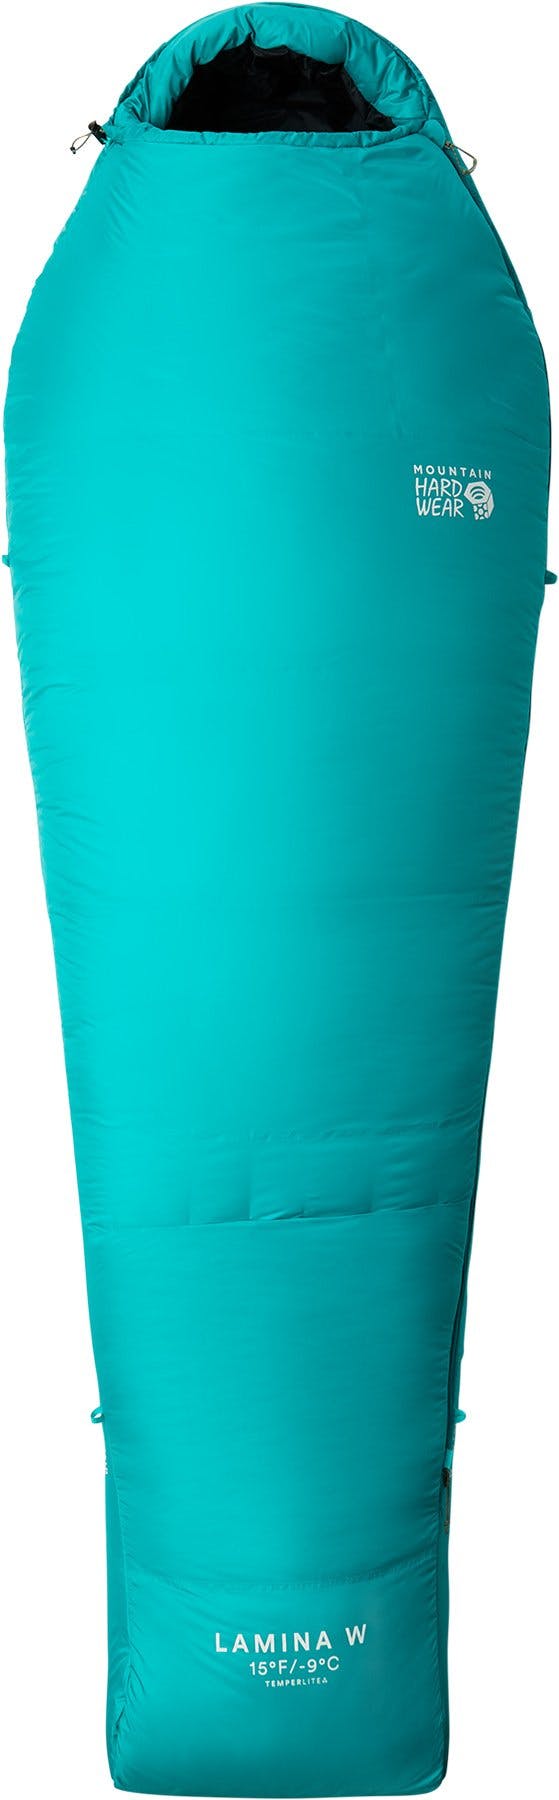 Product image for Lamina Sleeping Bag 15°F/-9°C - Regular - Women's